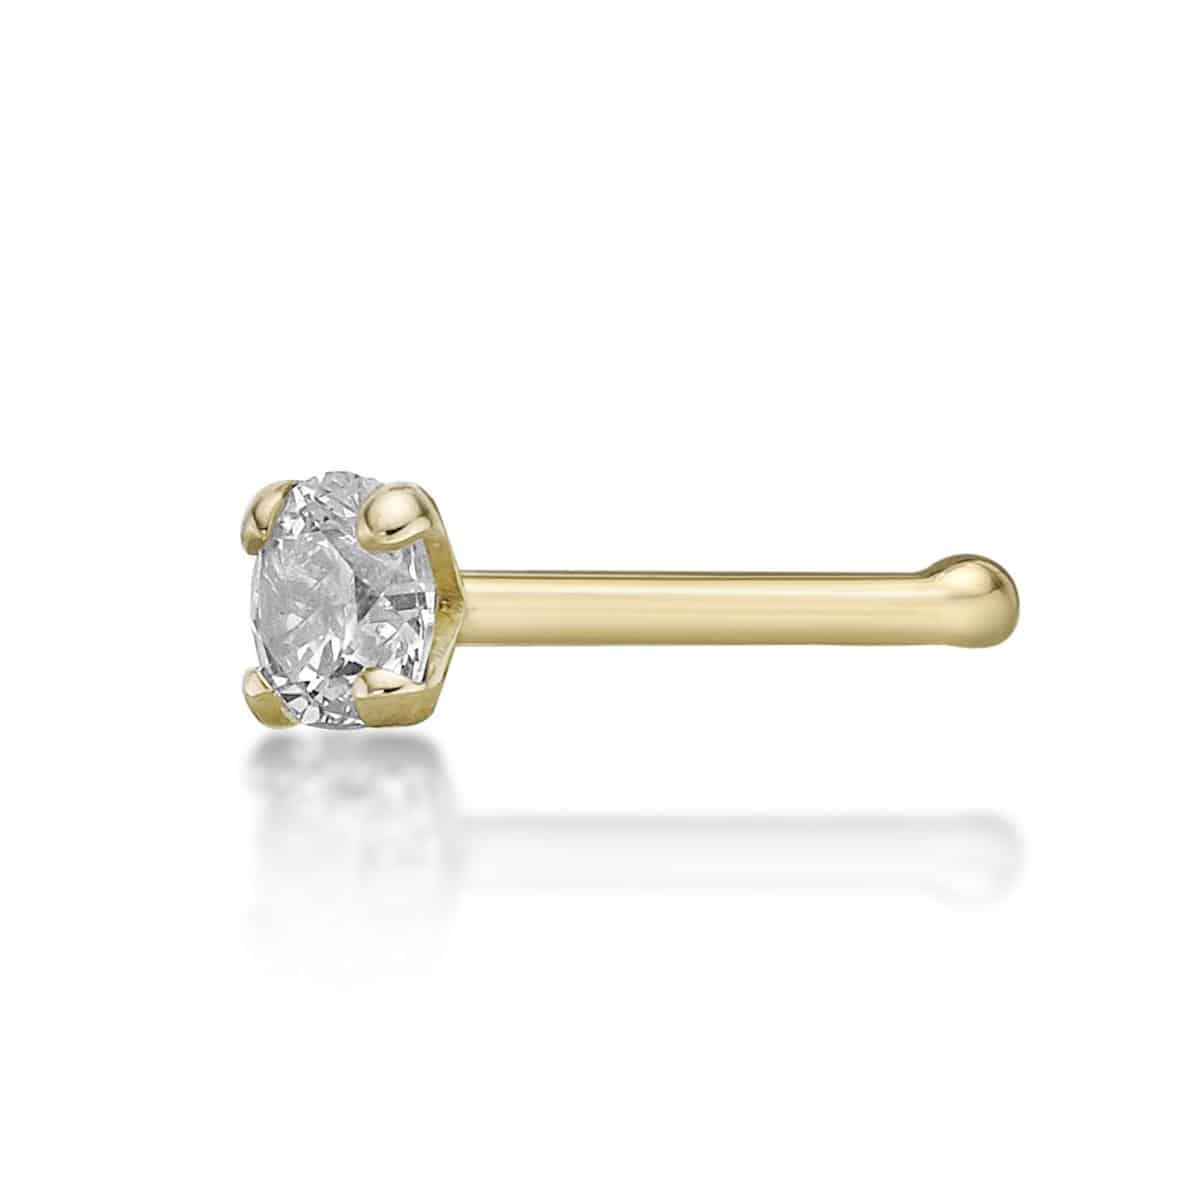 50746-nose-ring-the-piercer-yellow-gold-white-diamond-0-07-h-i2-i3-50746-6